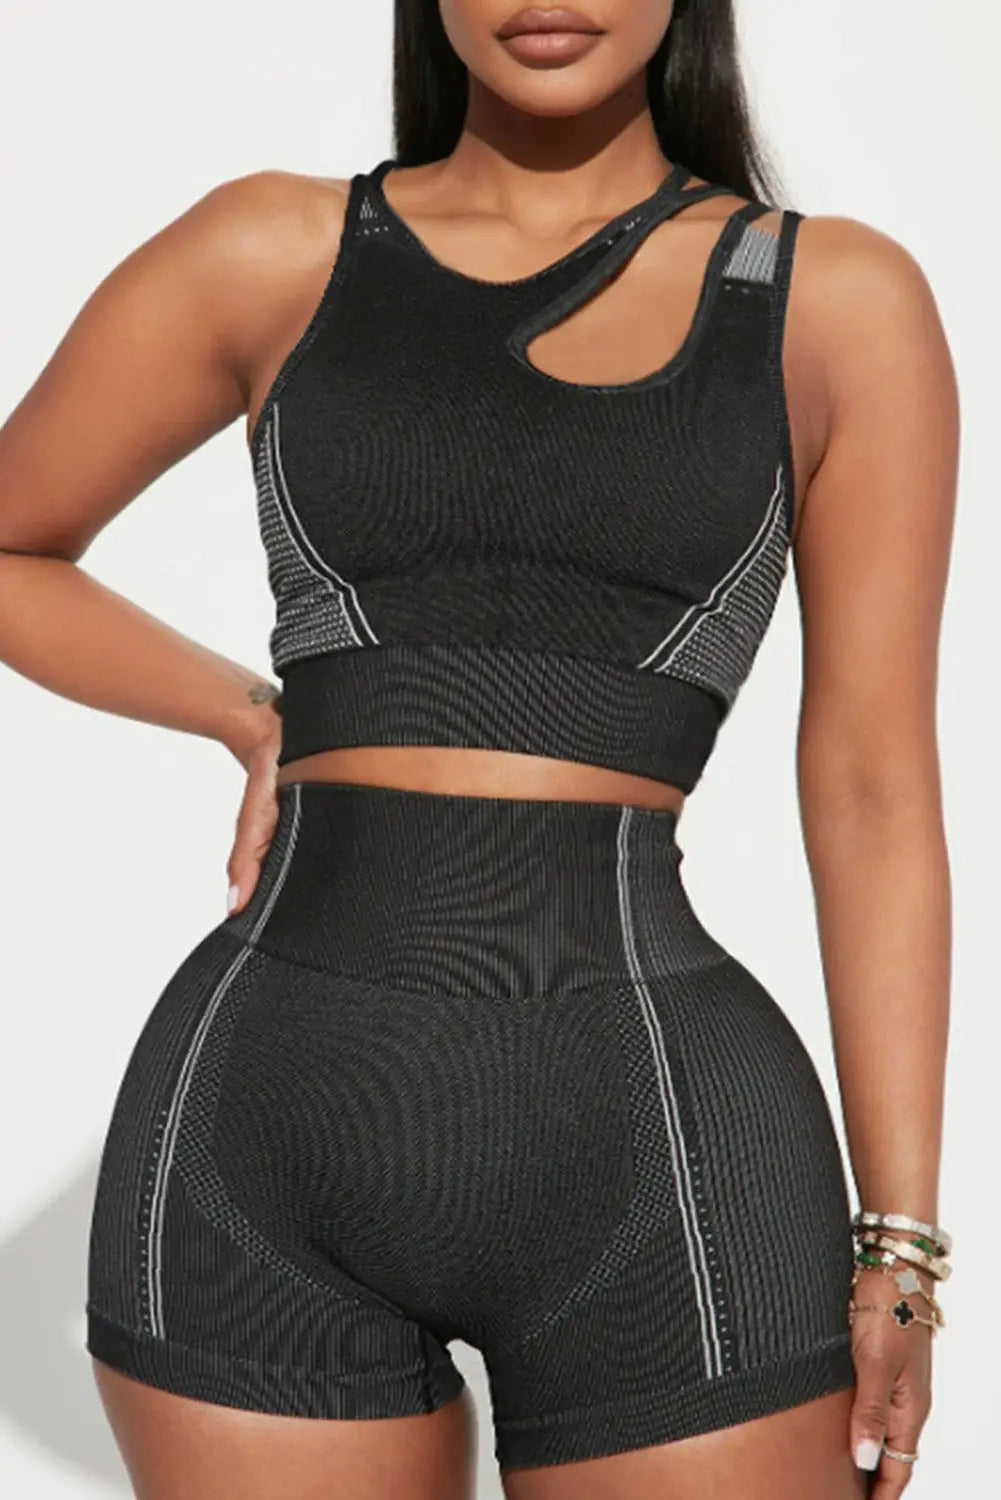 Black strappy mix pattern cutout bra and shorts set - s - activewear